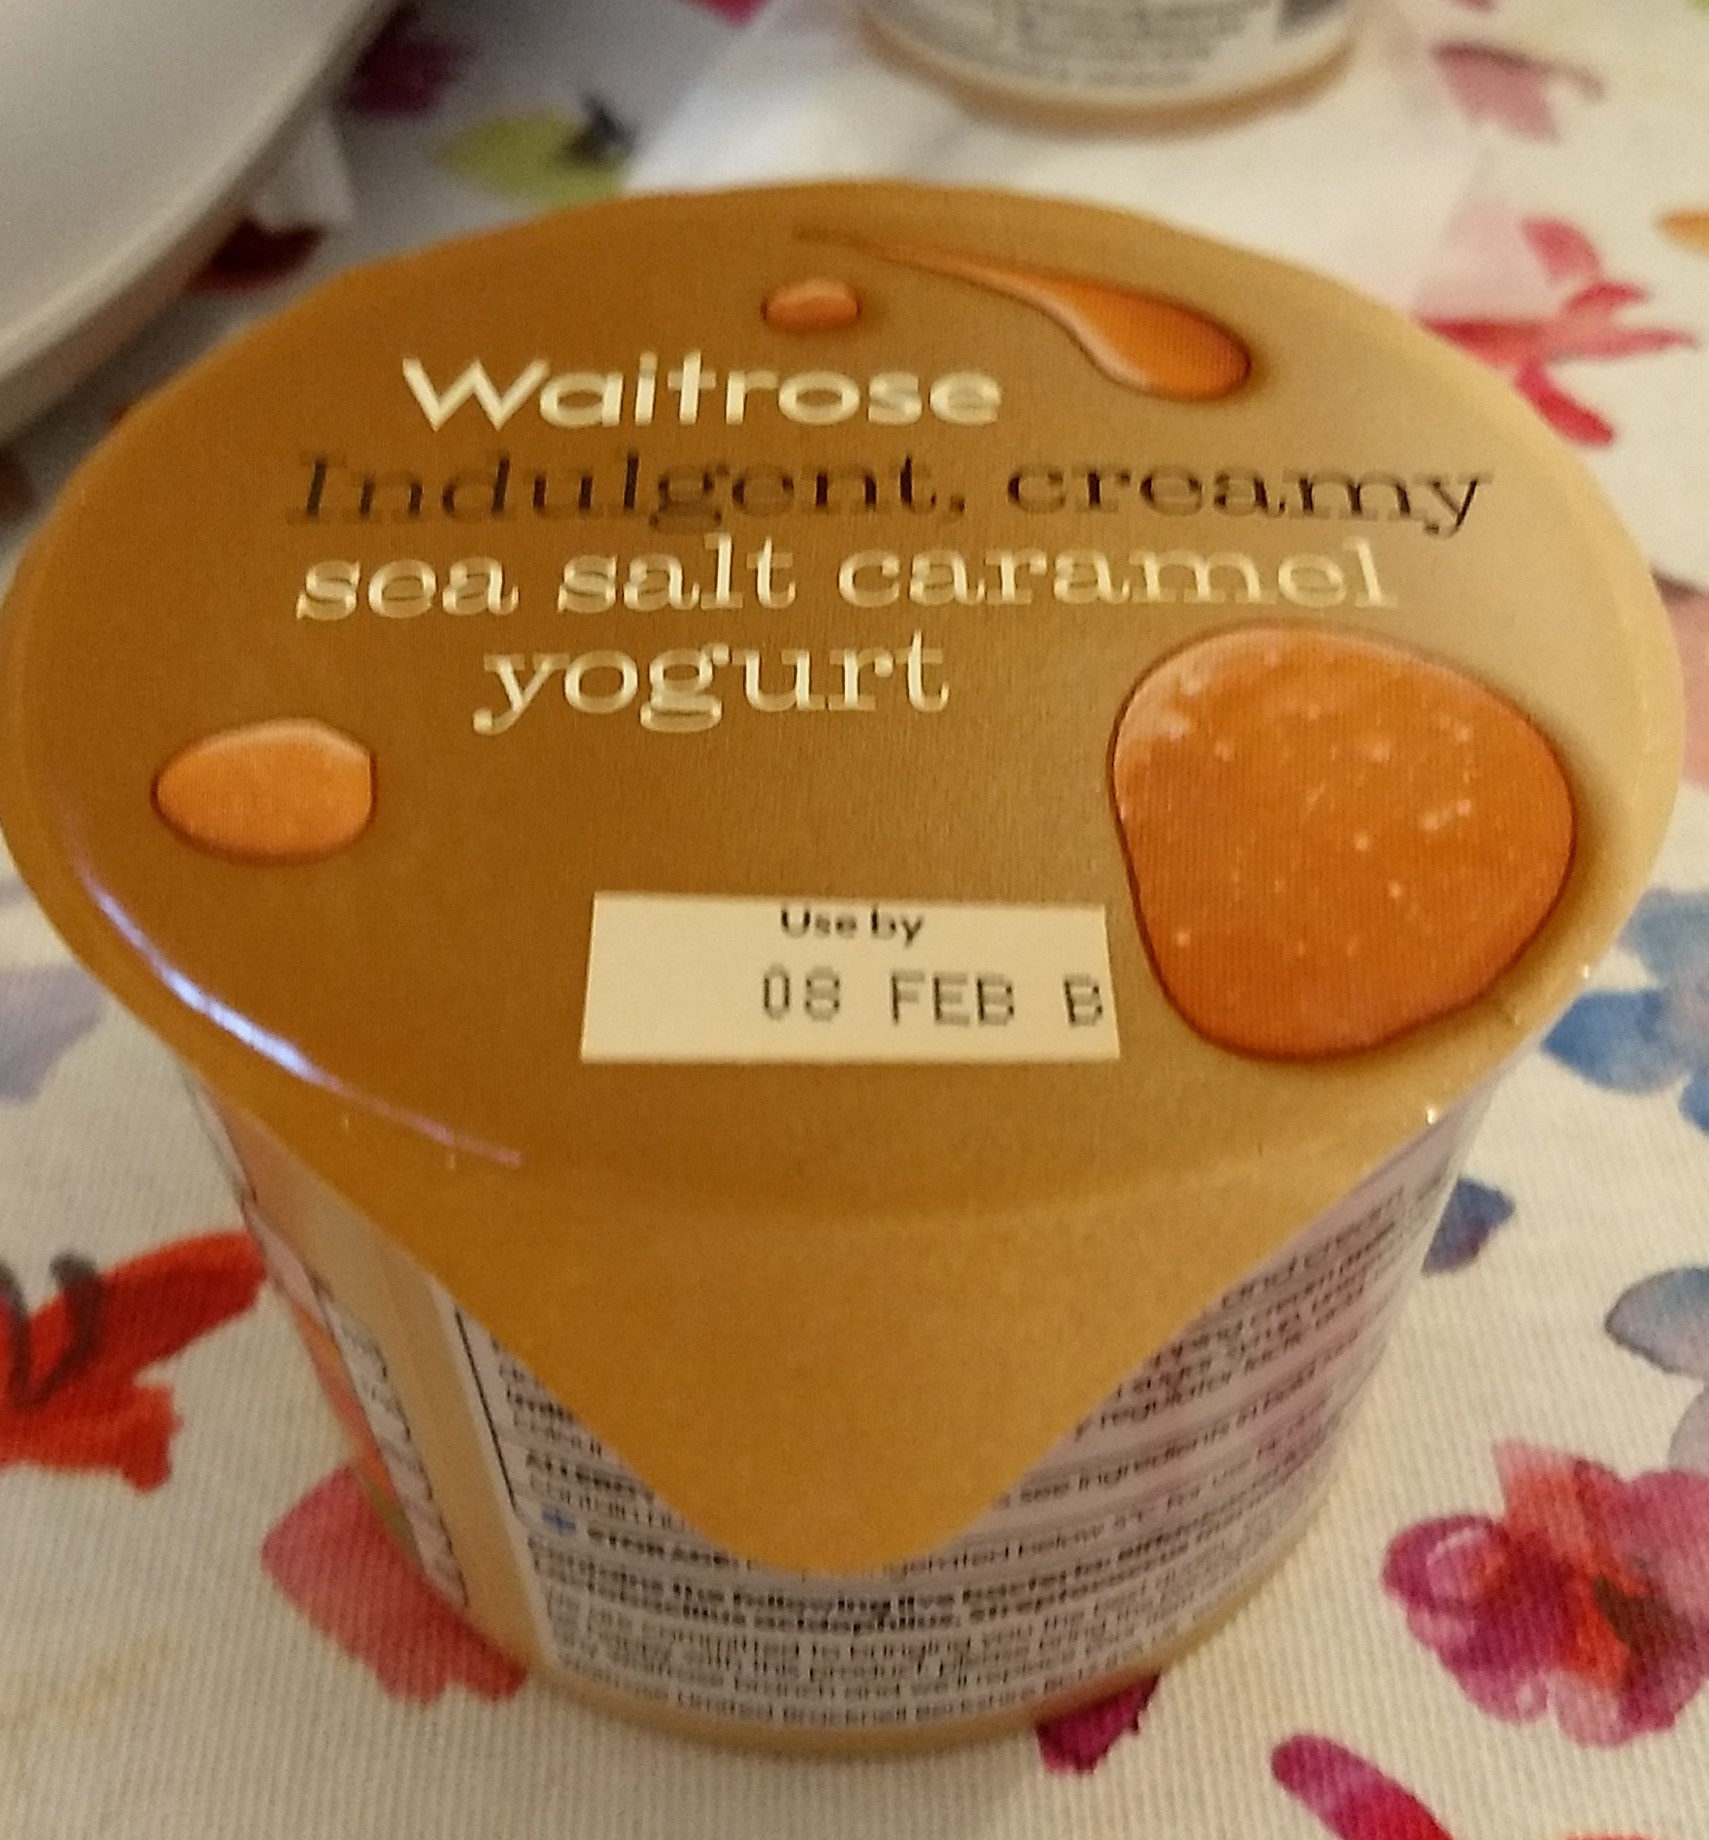 Indulgent, creamy sea salt caramel yougurt - Produkt - en